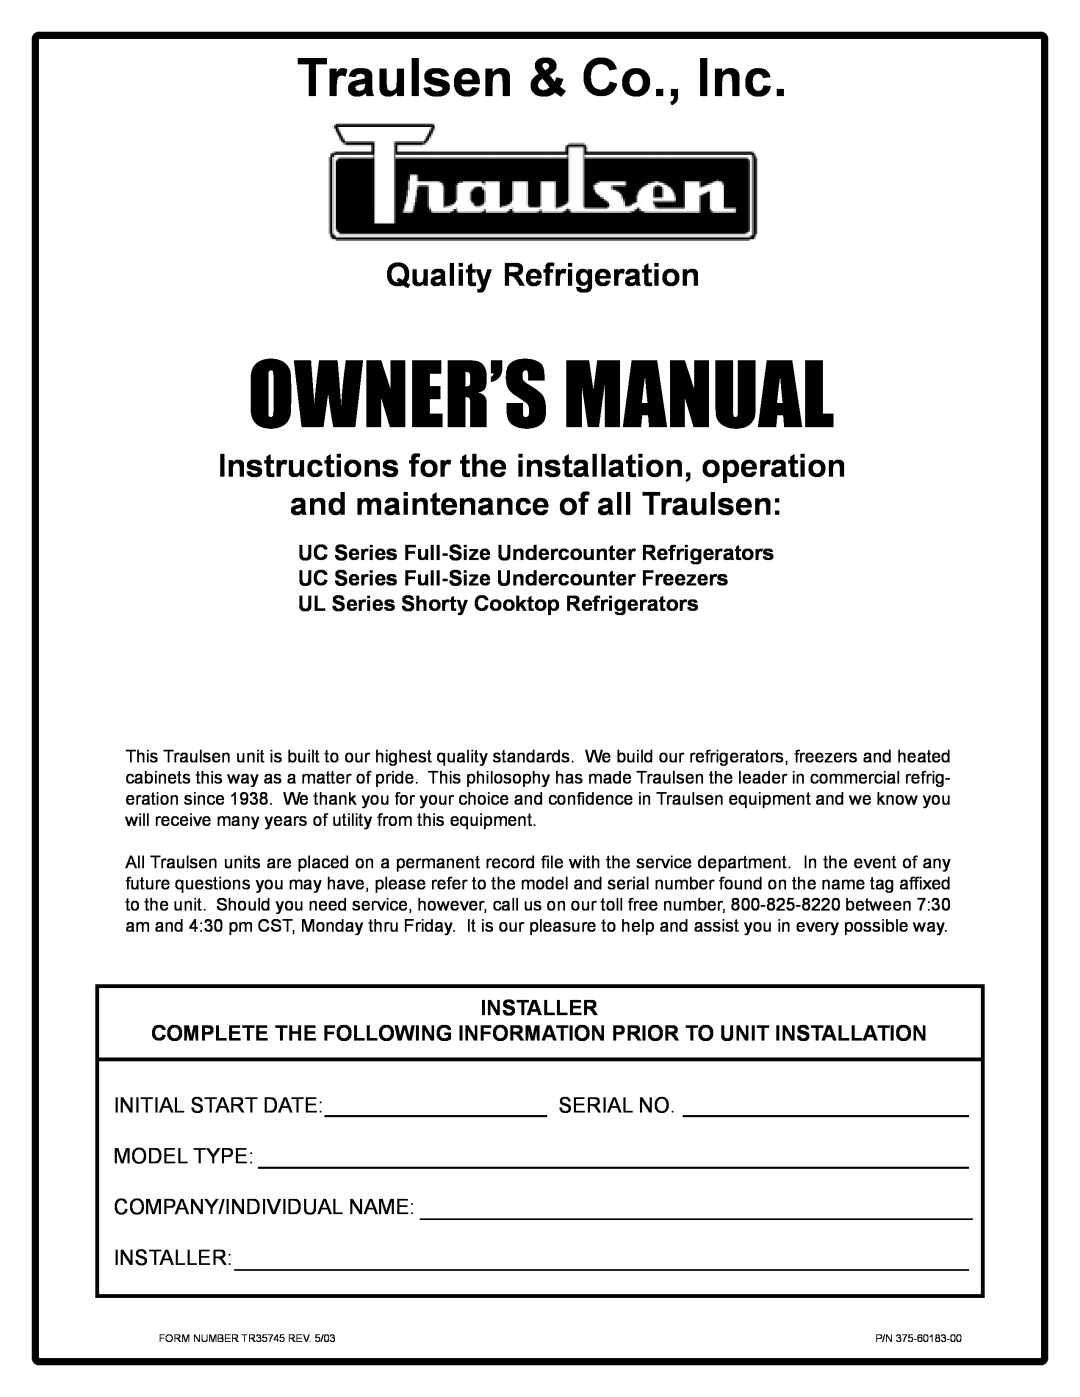 Traulsen UL Series owner manual UC Series Full-Size Undercounter Refrigerators, UC Series Full-Size Undercounter Freezers 